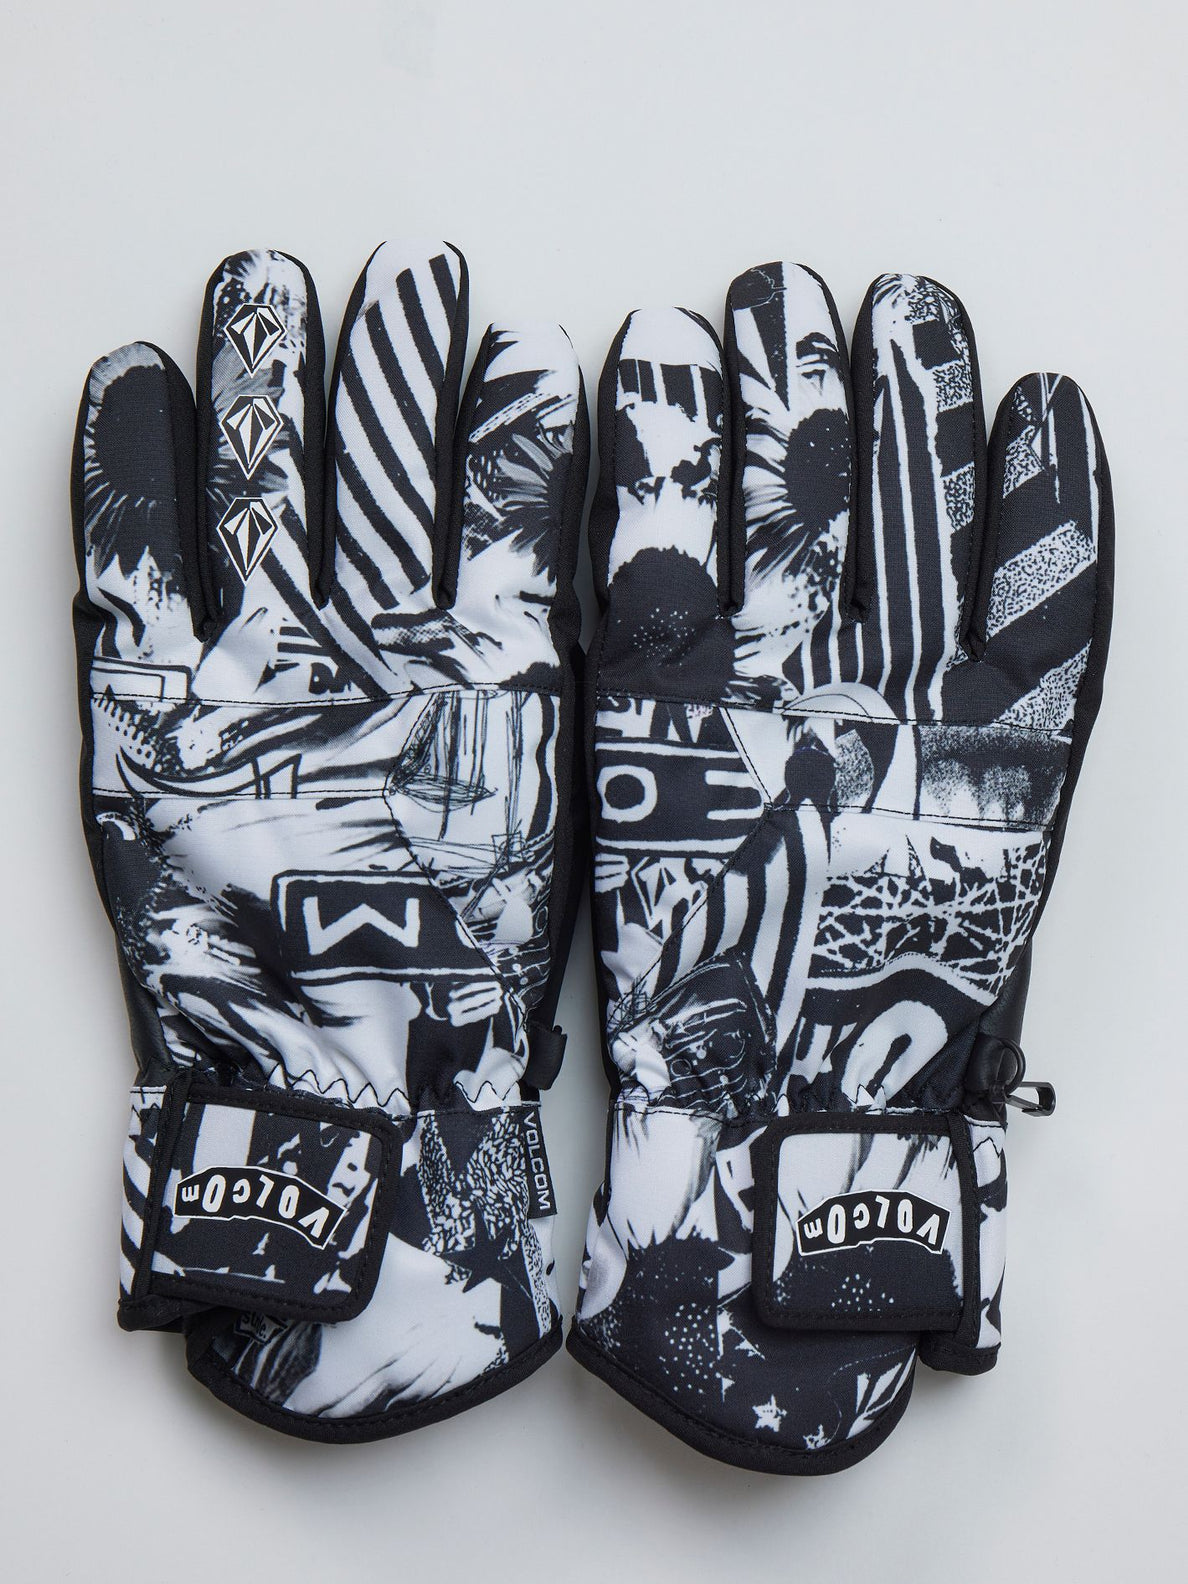 Jp Stn Glove - New Black